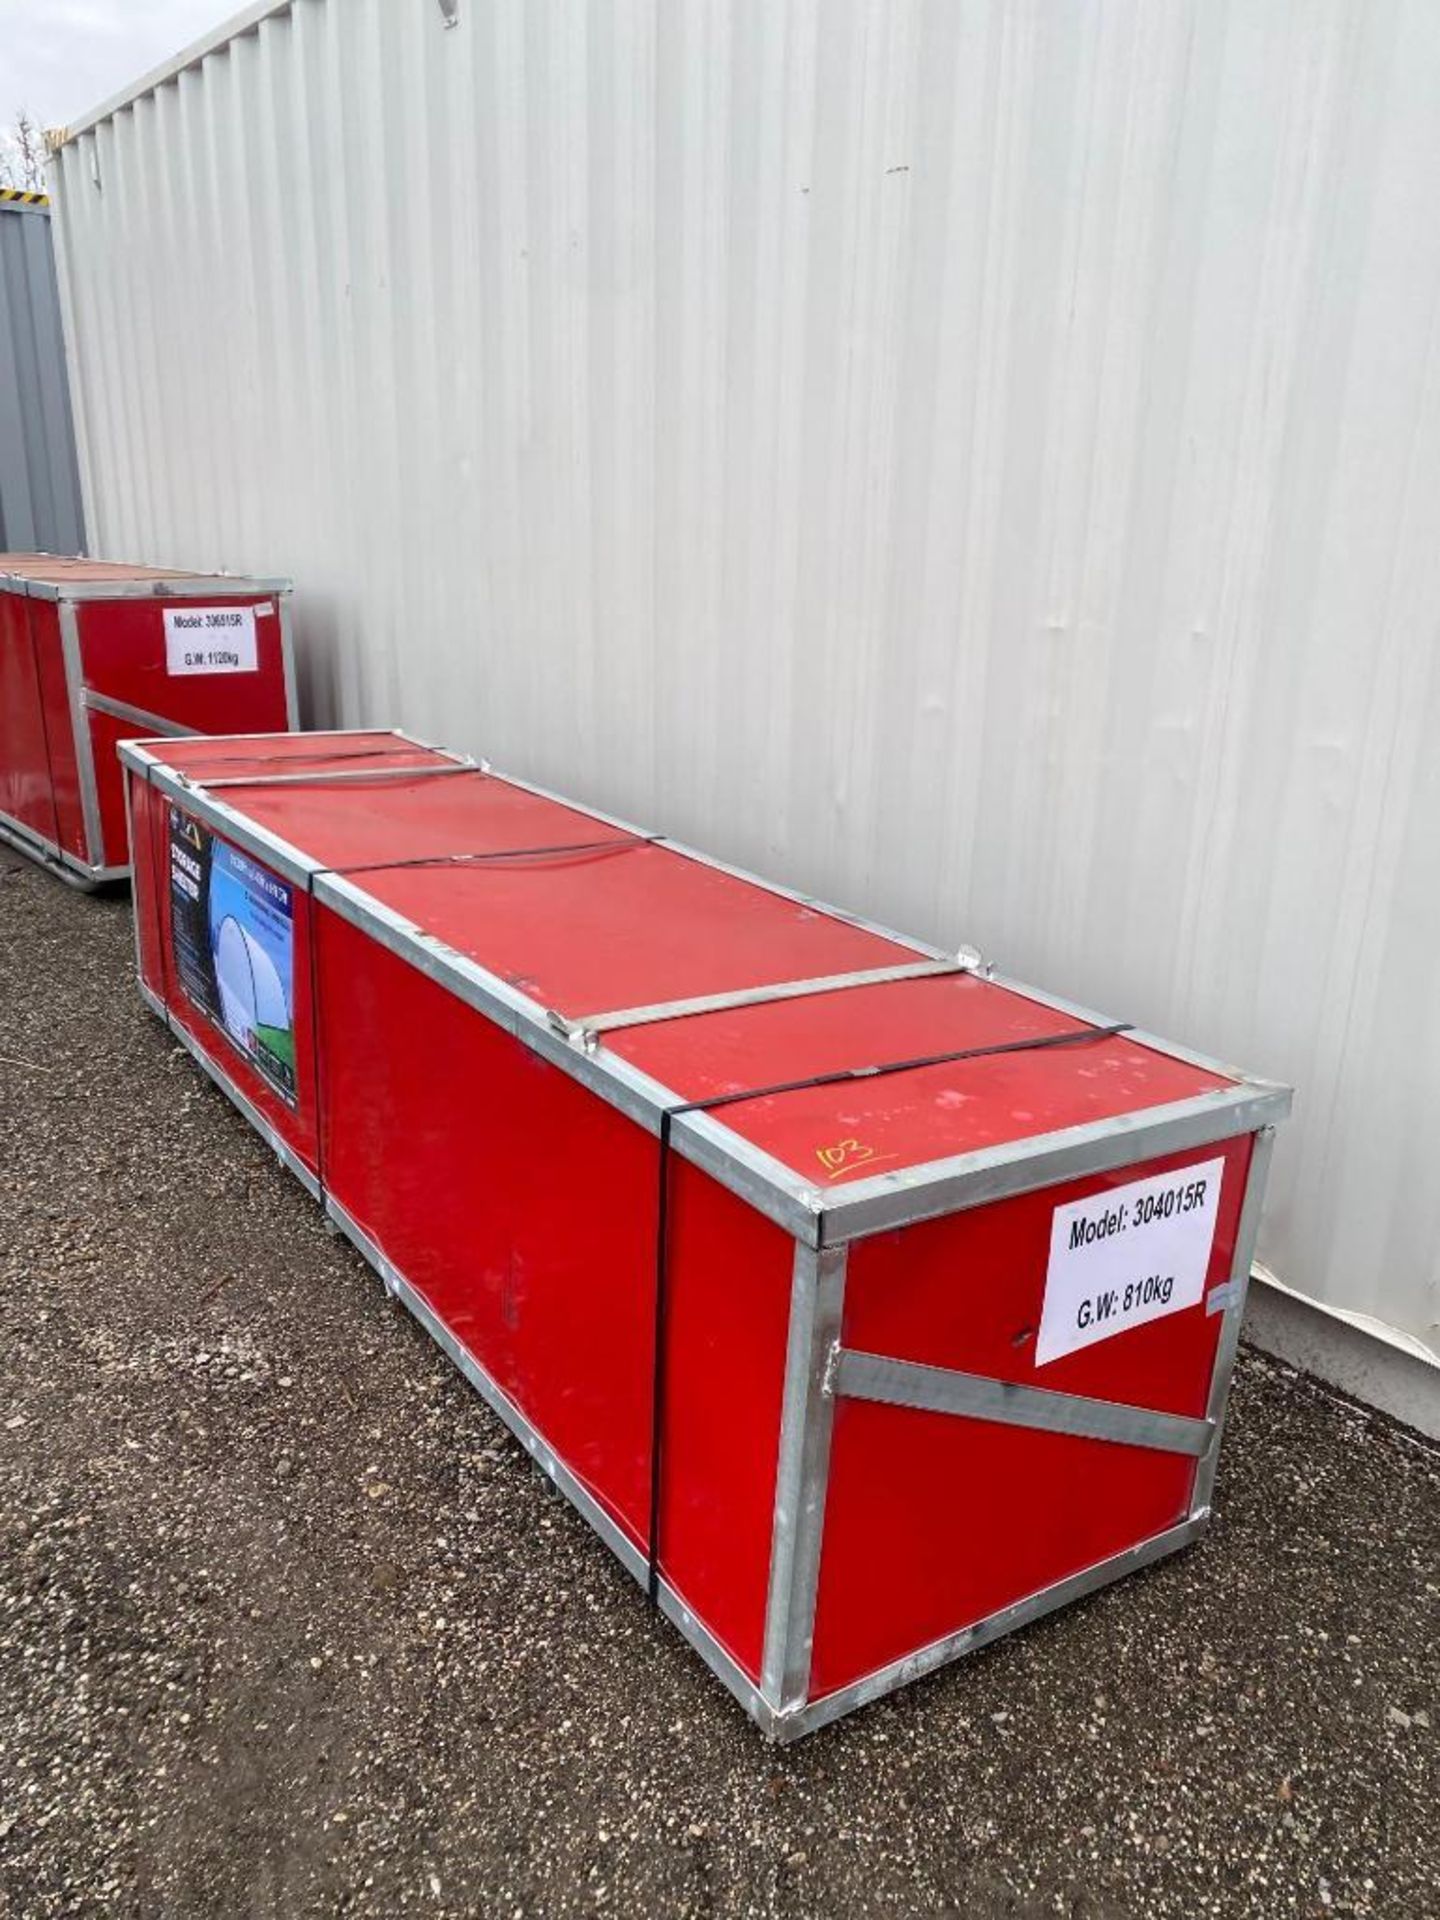 New Chery Industrial 30ft x 40ft x 15ft Outdoor Storage Shelter Model 304015R - Bild 3 aus 4